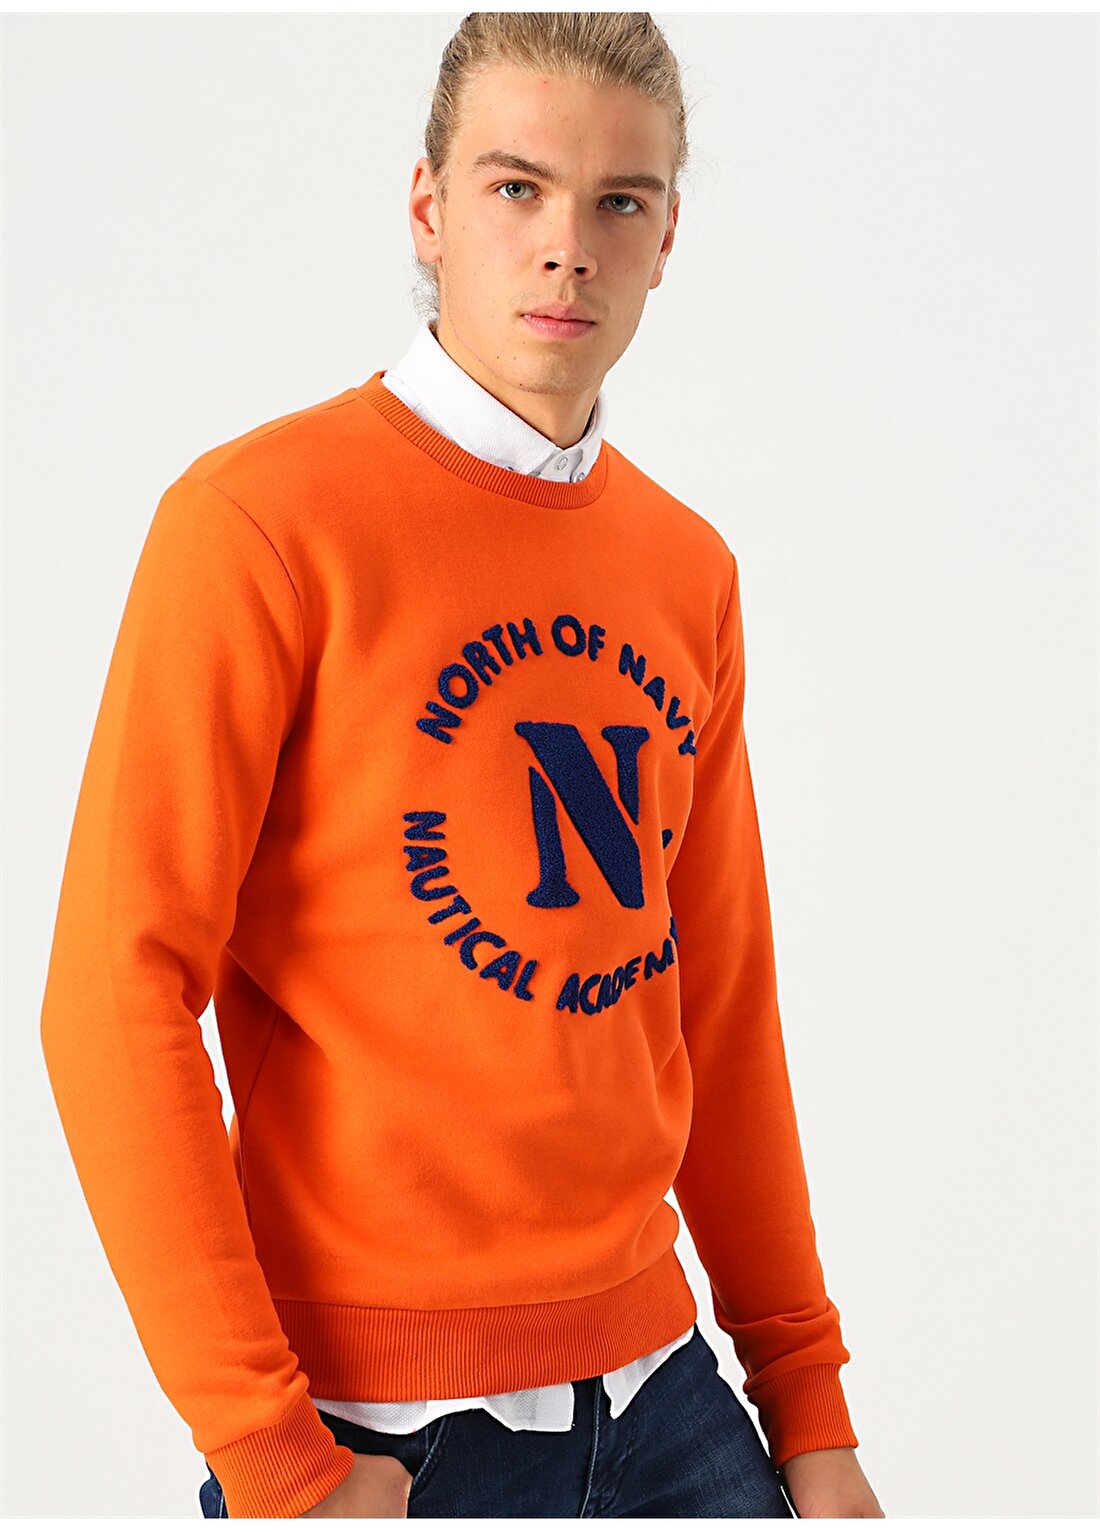 North Of Navy Turuncu Sweatshirt